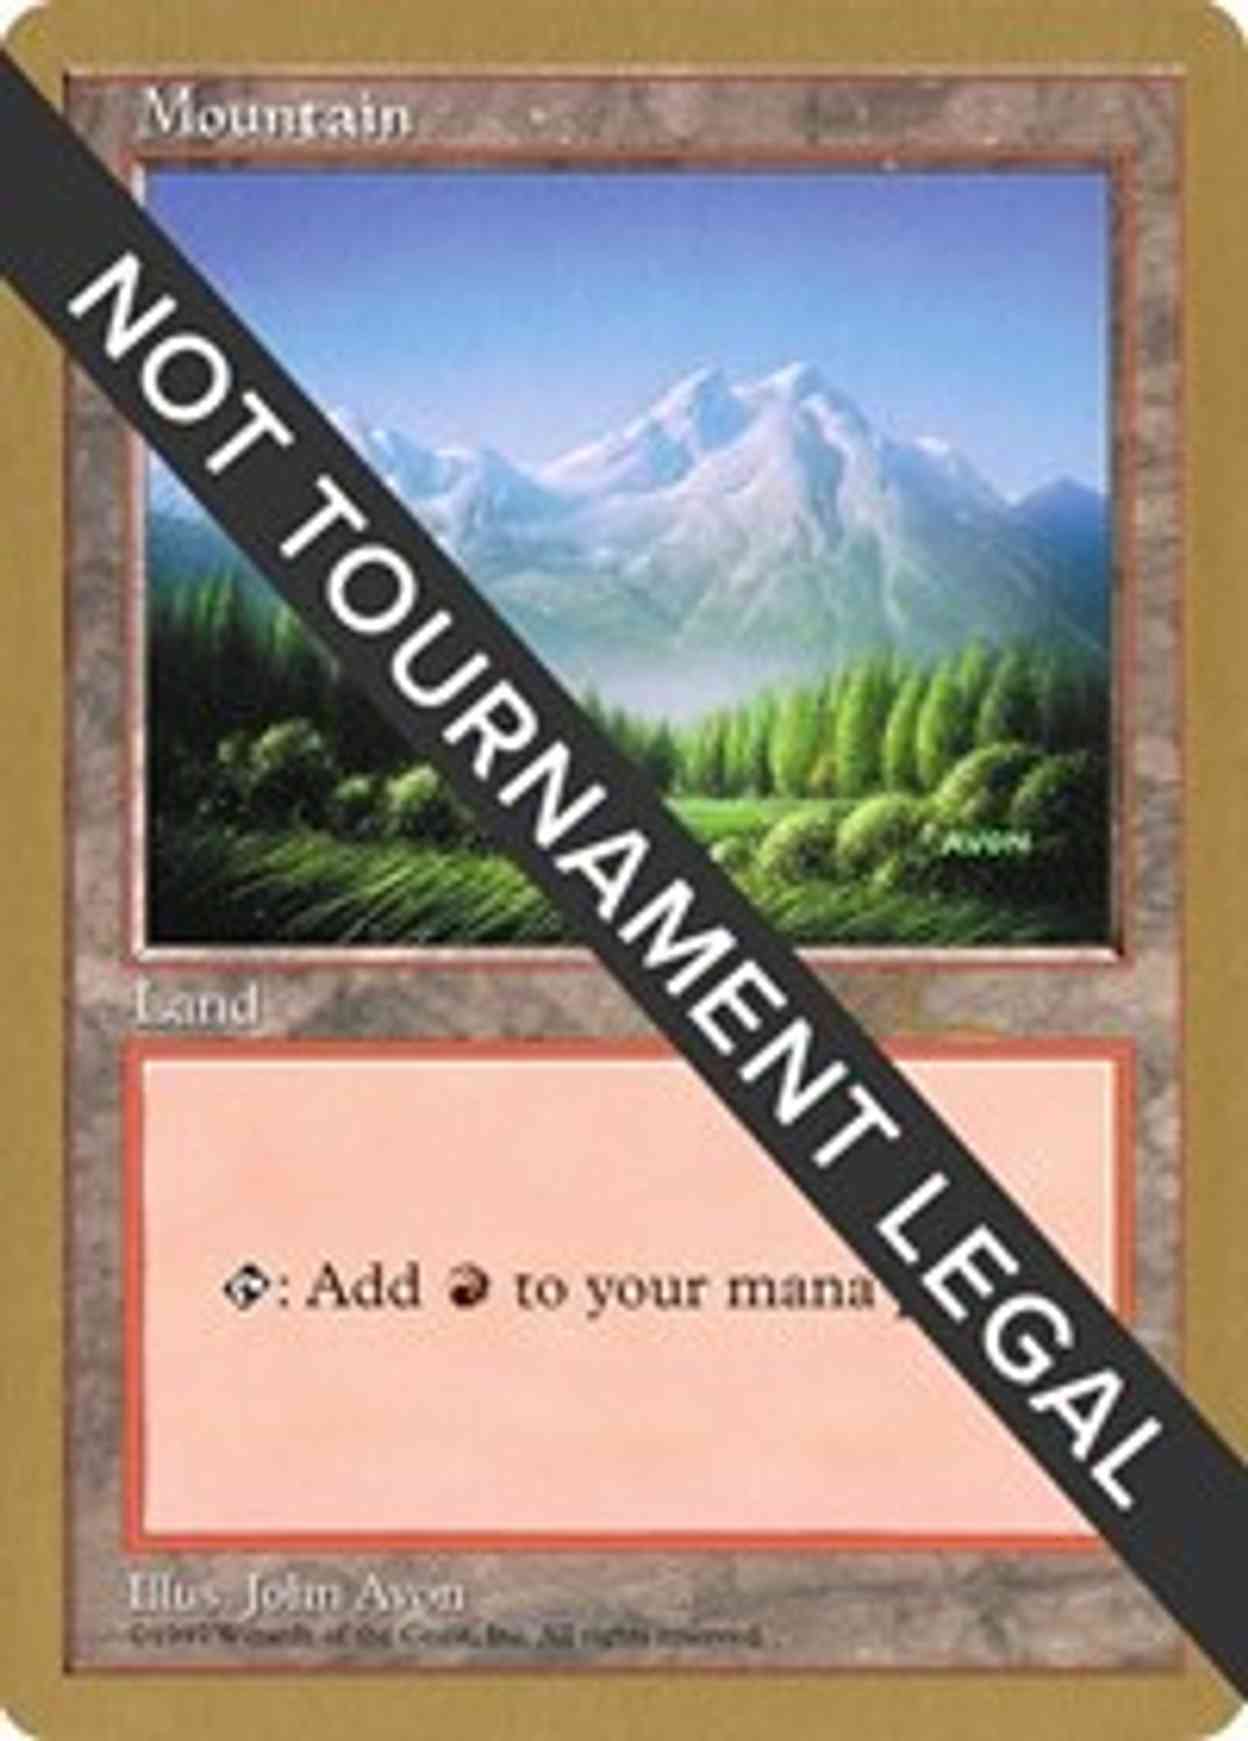 Mountain (431) - 1997 Paul McCabe (5ED) magic card front